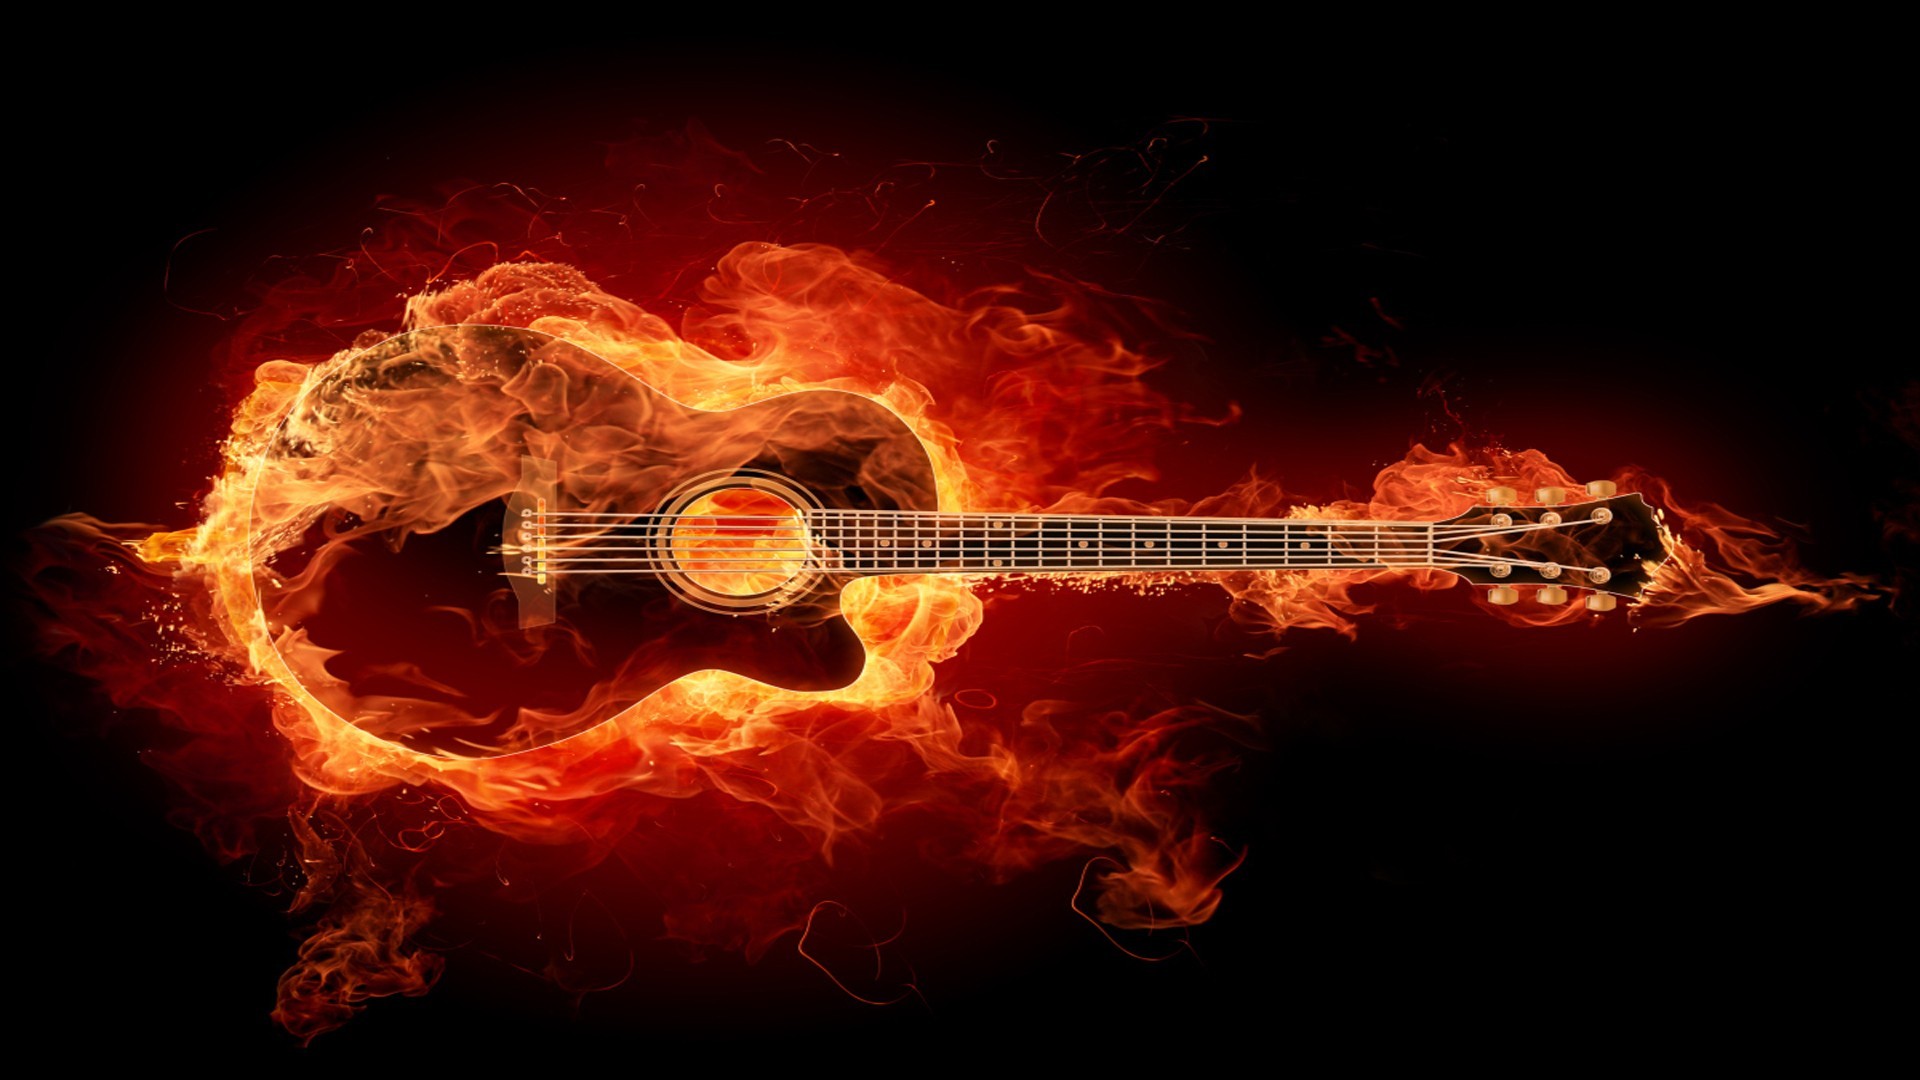 1920x1080  Guitar In Flames wallpaper - 121315